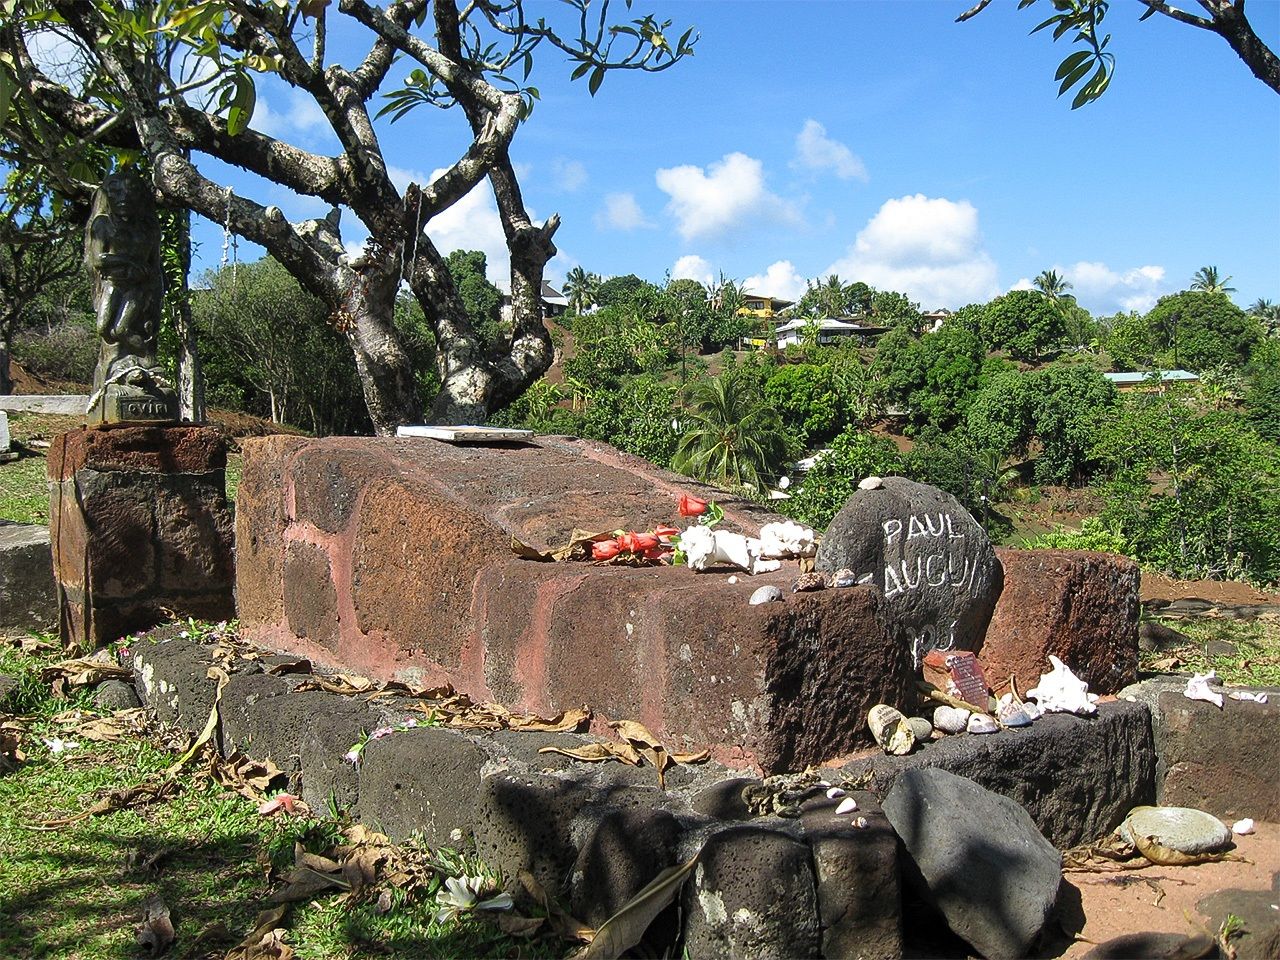 The grave of artist and former Paris stockbroker Paul Gauguin in Hiva Oa.